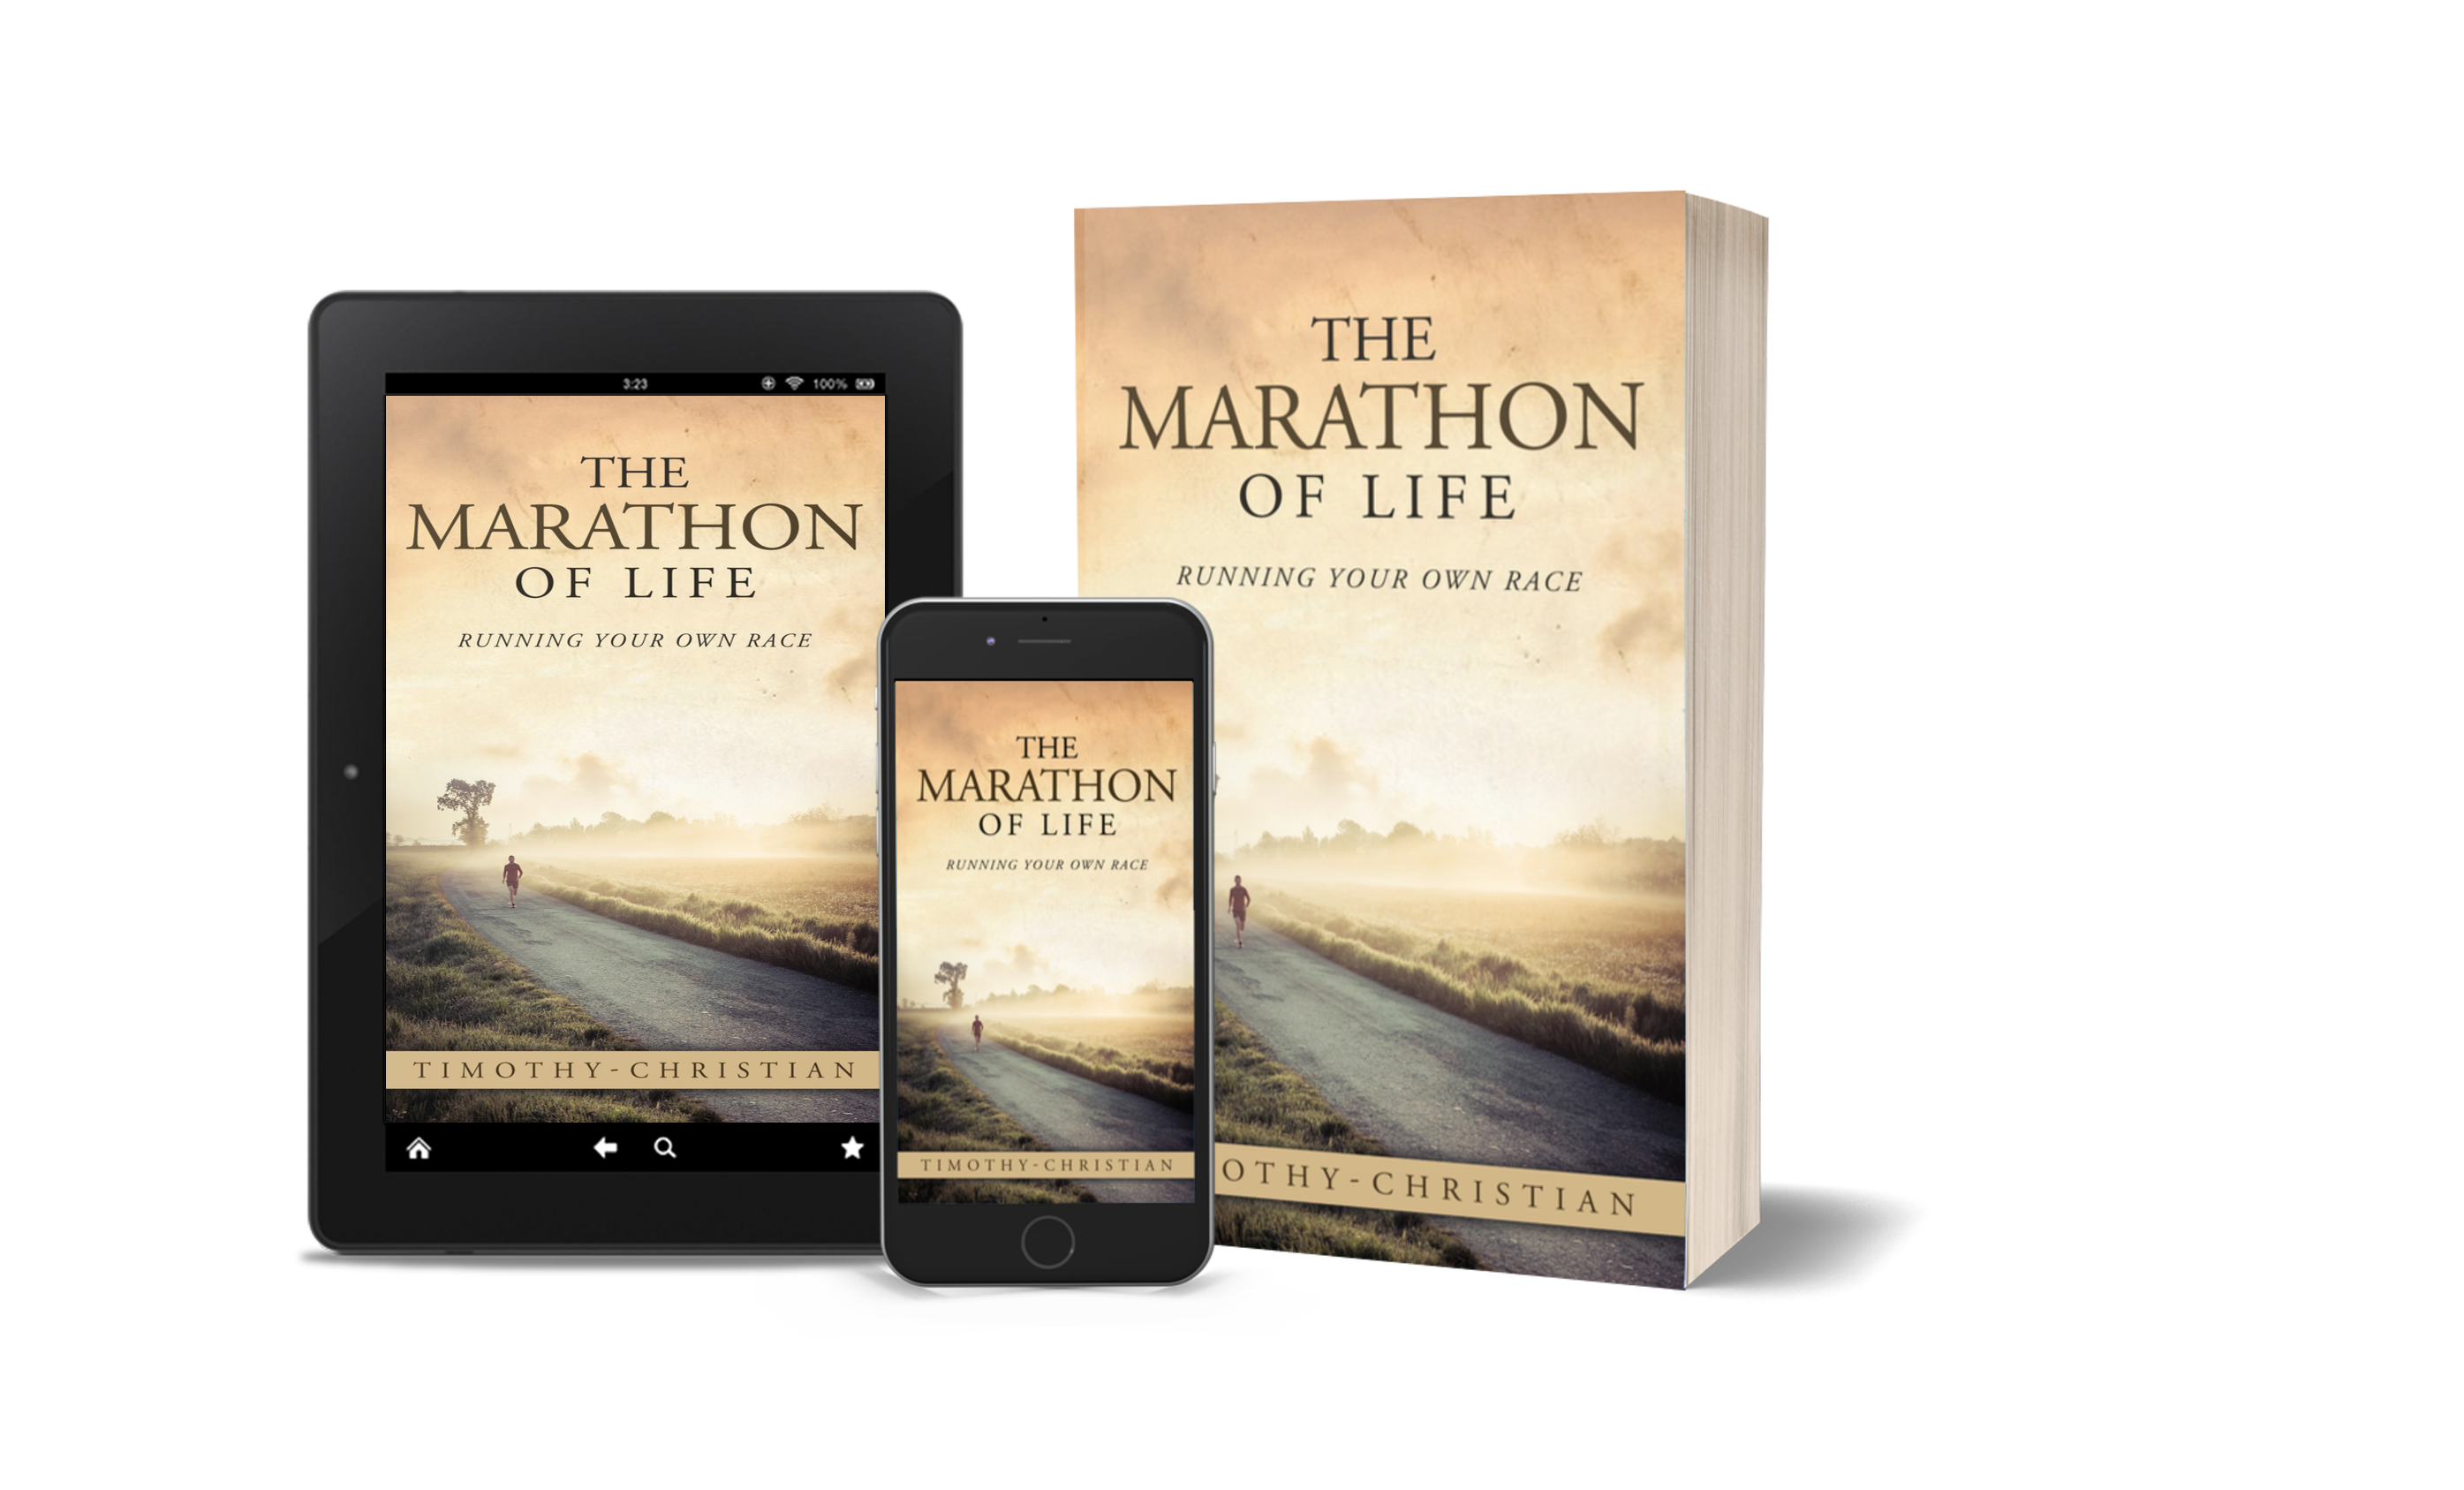 The Marathon of Life Author Timothy-Christian